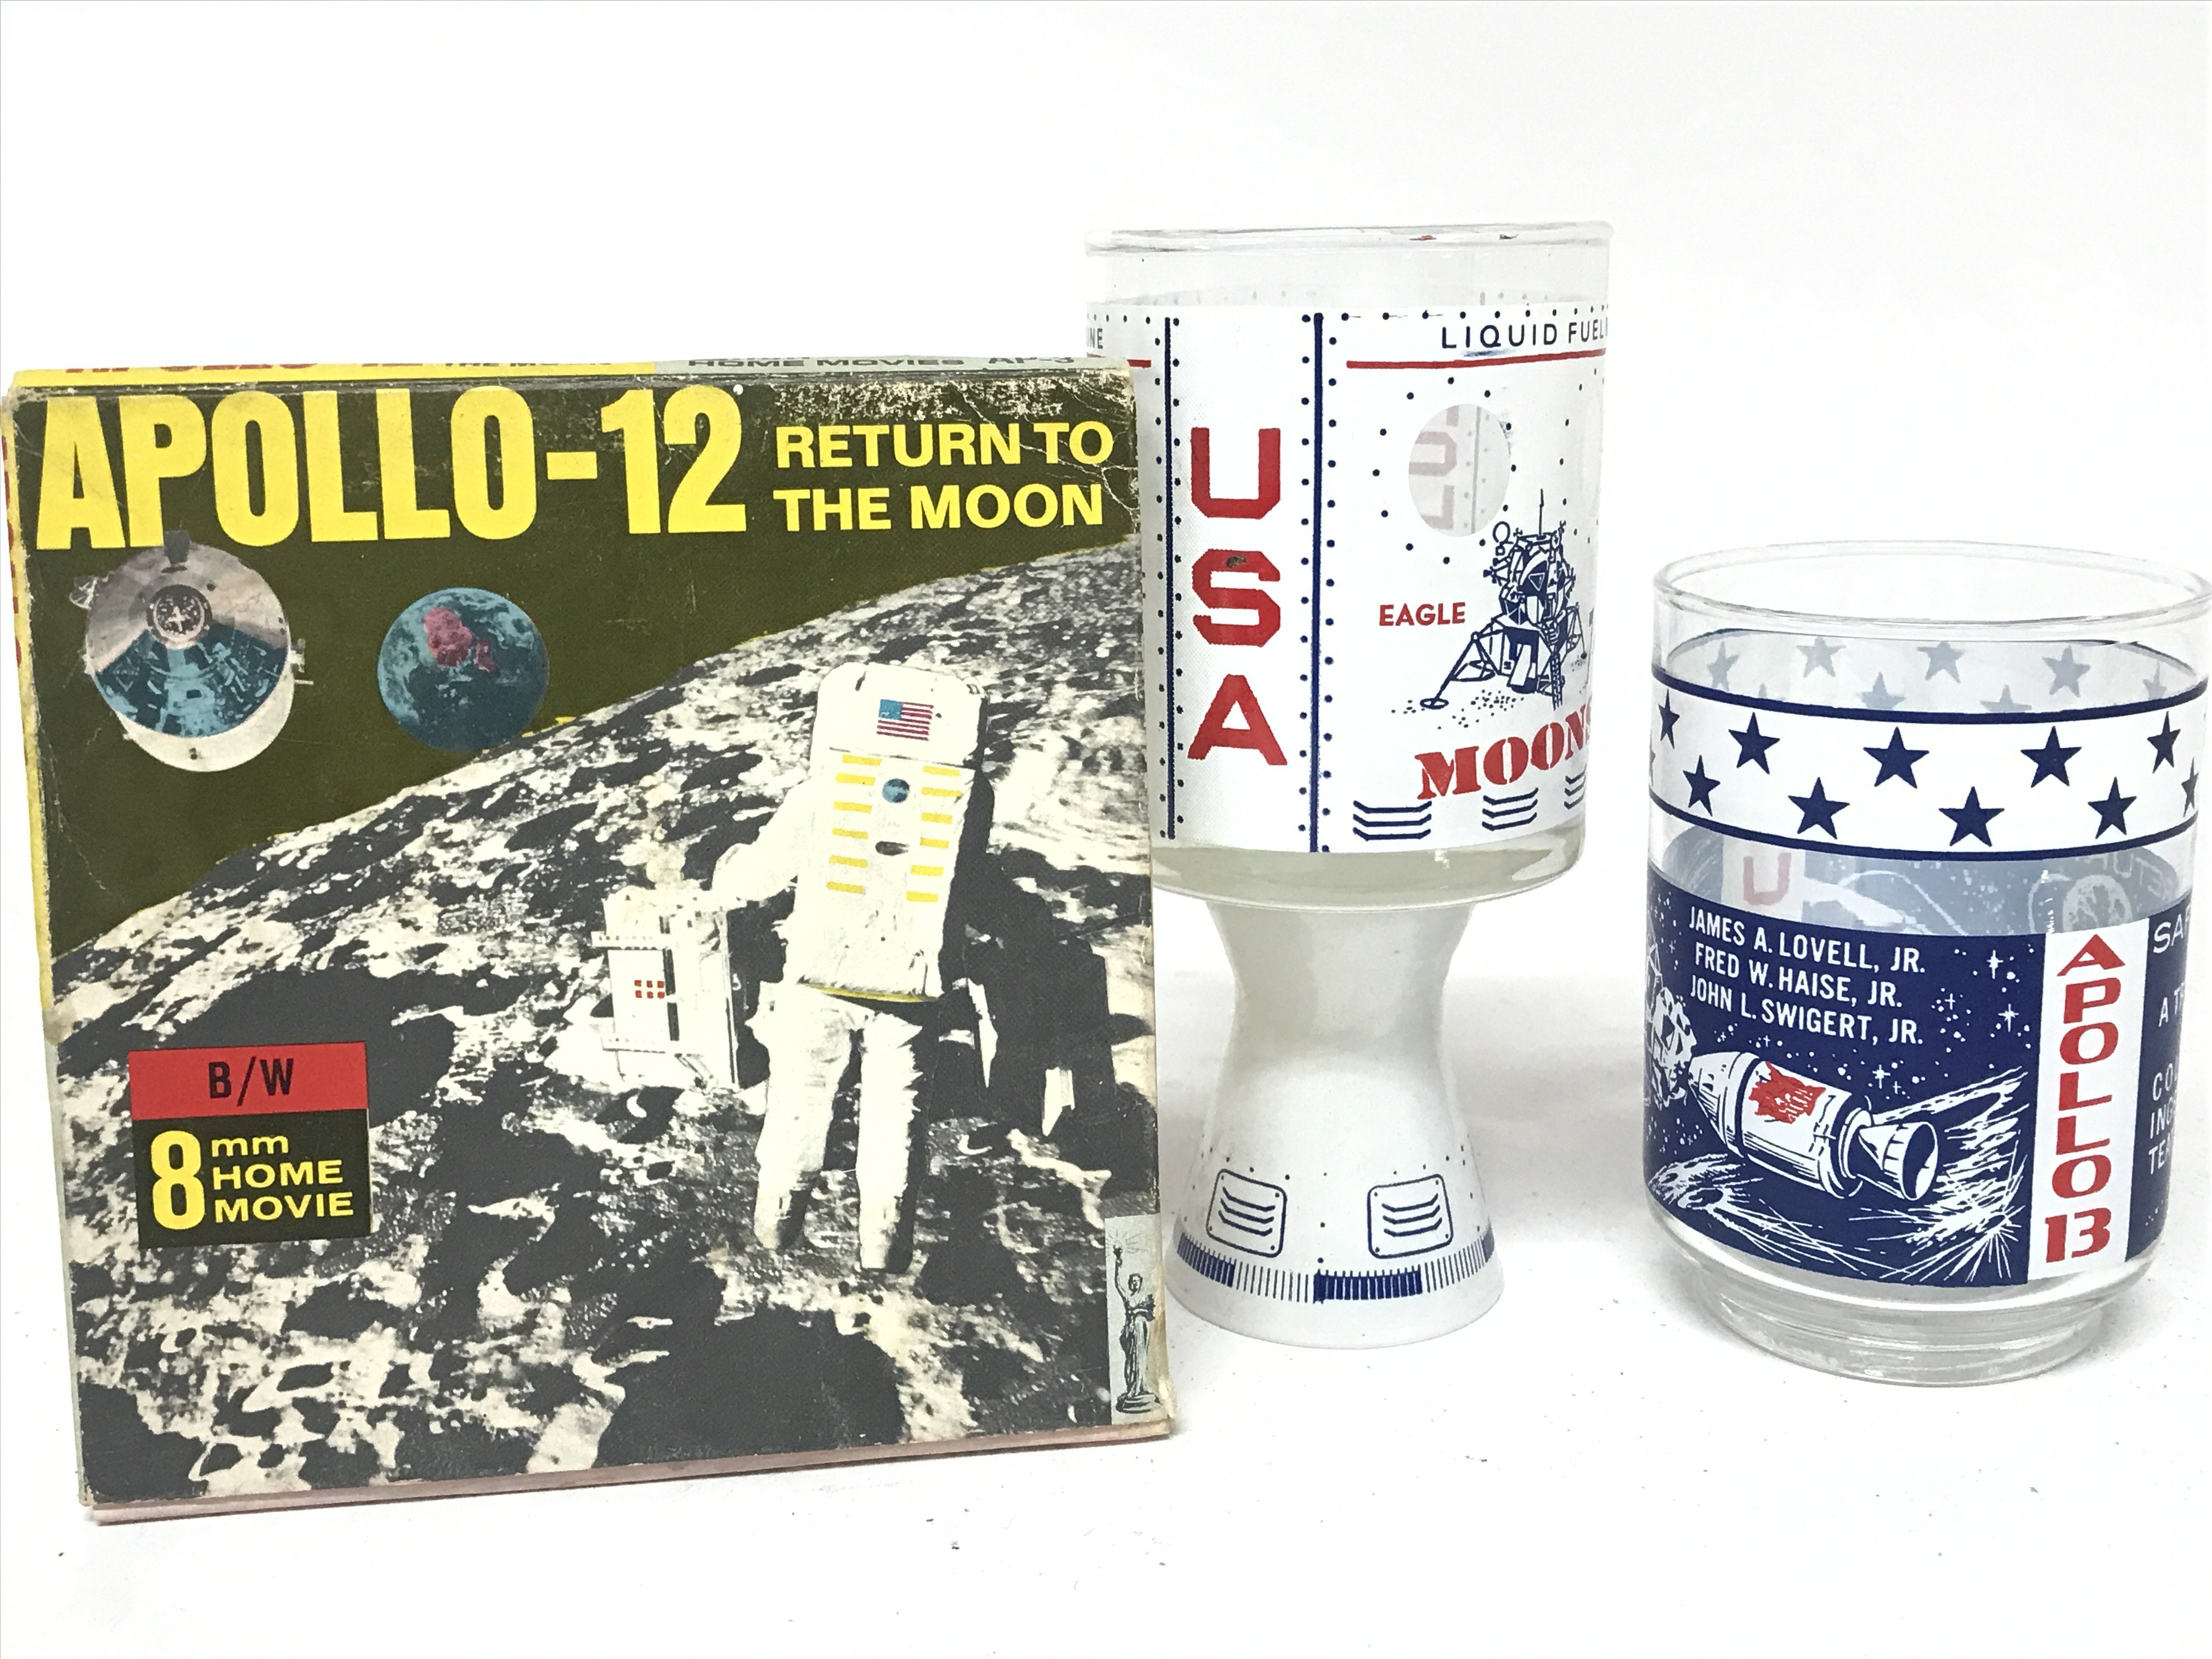 A Collection of vintage Moon landing memorabilia i